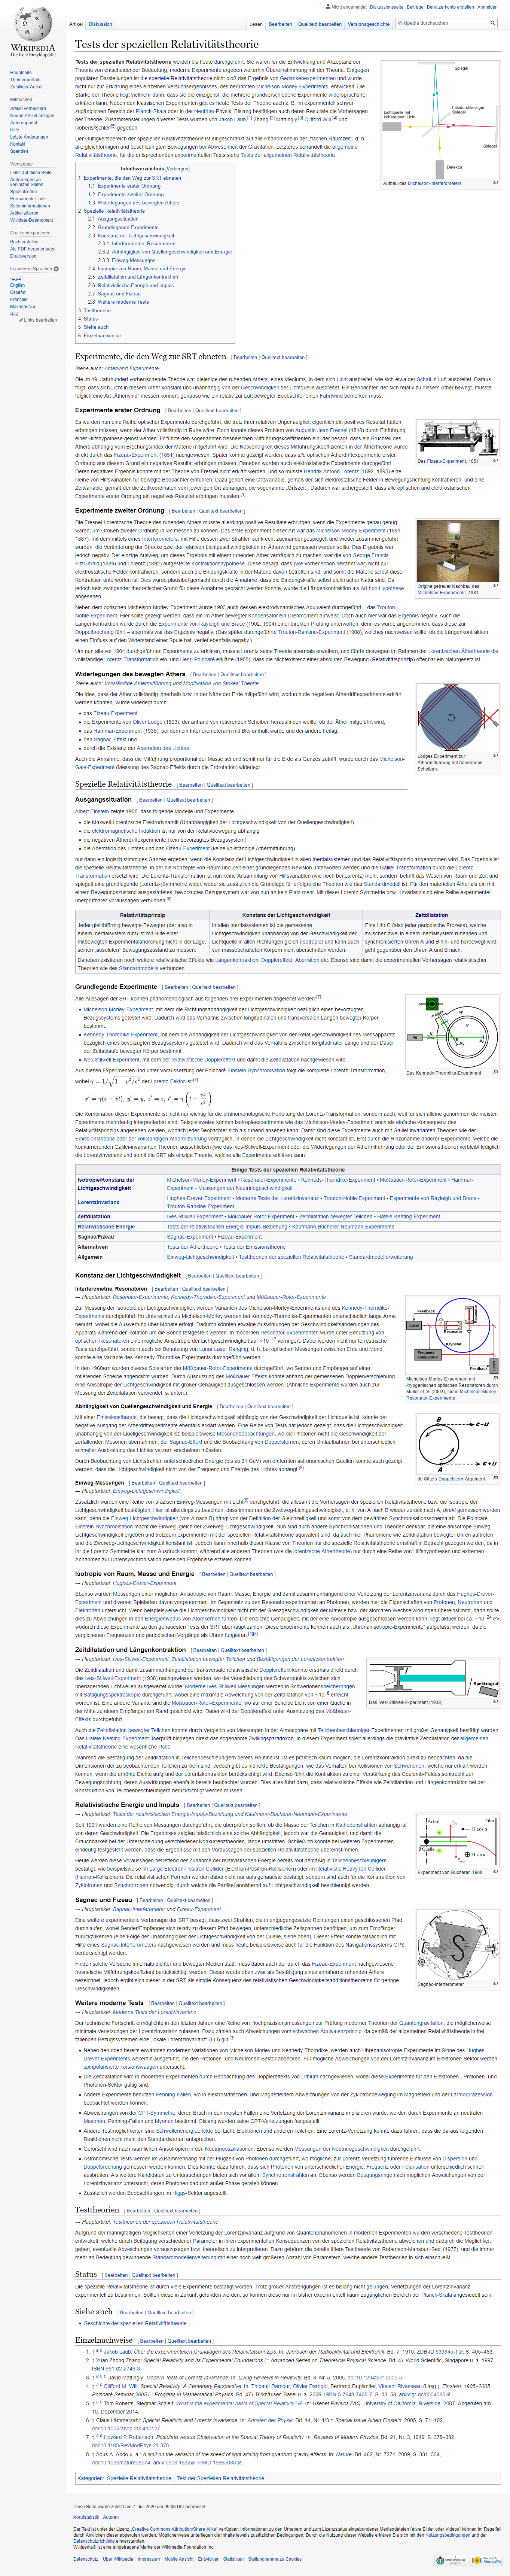 screencapture-de-wikipedia-org-wiki-Tests-der-speziellen-Relativitatstheorie-2020-09-21-16_20_35.png